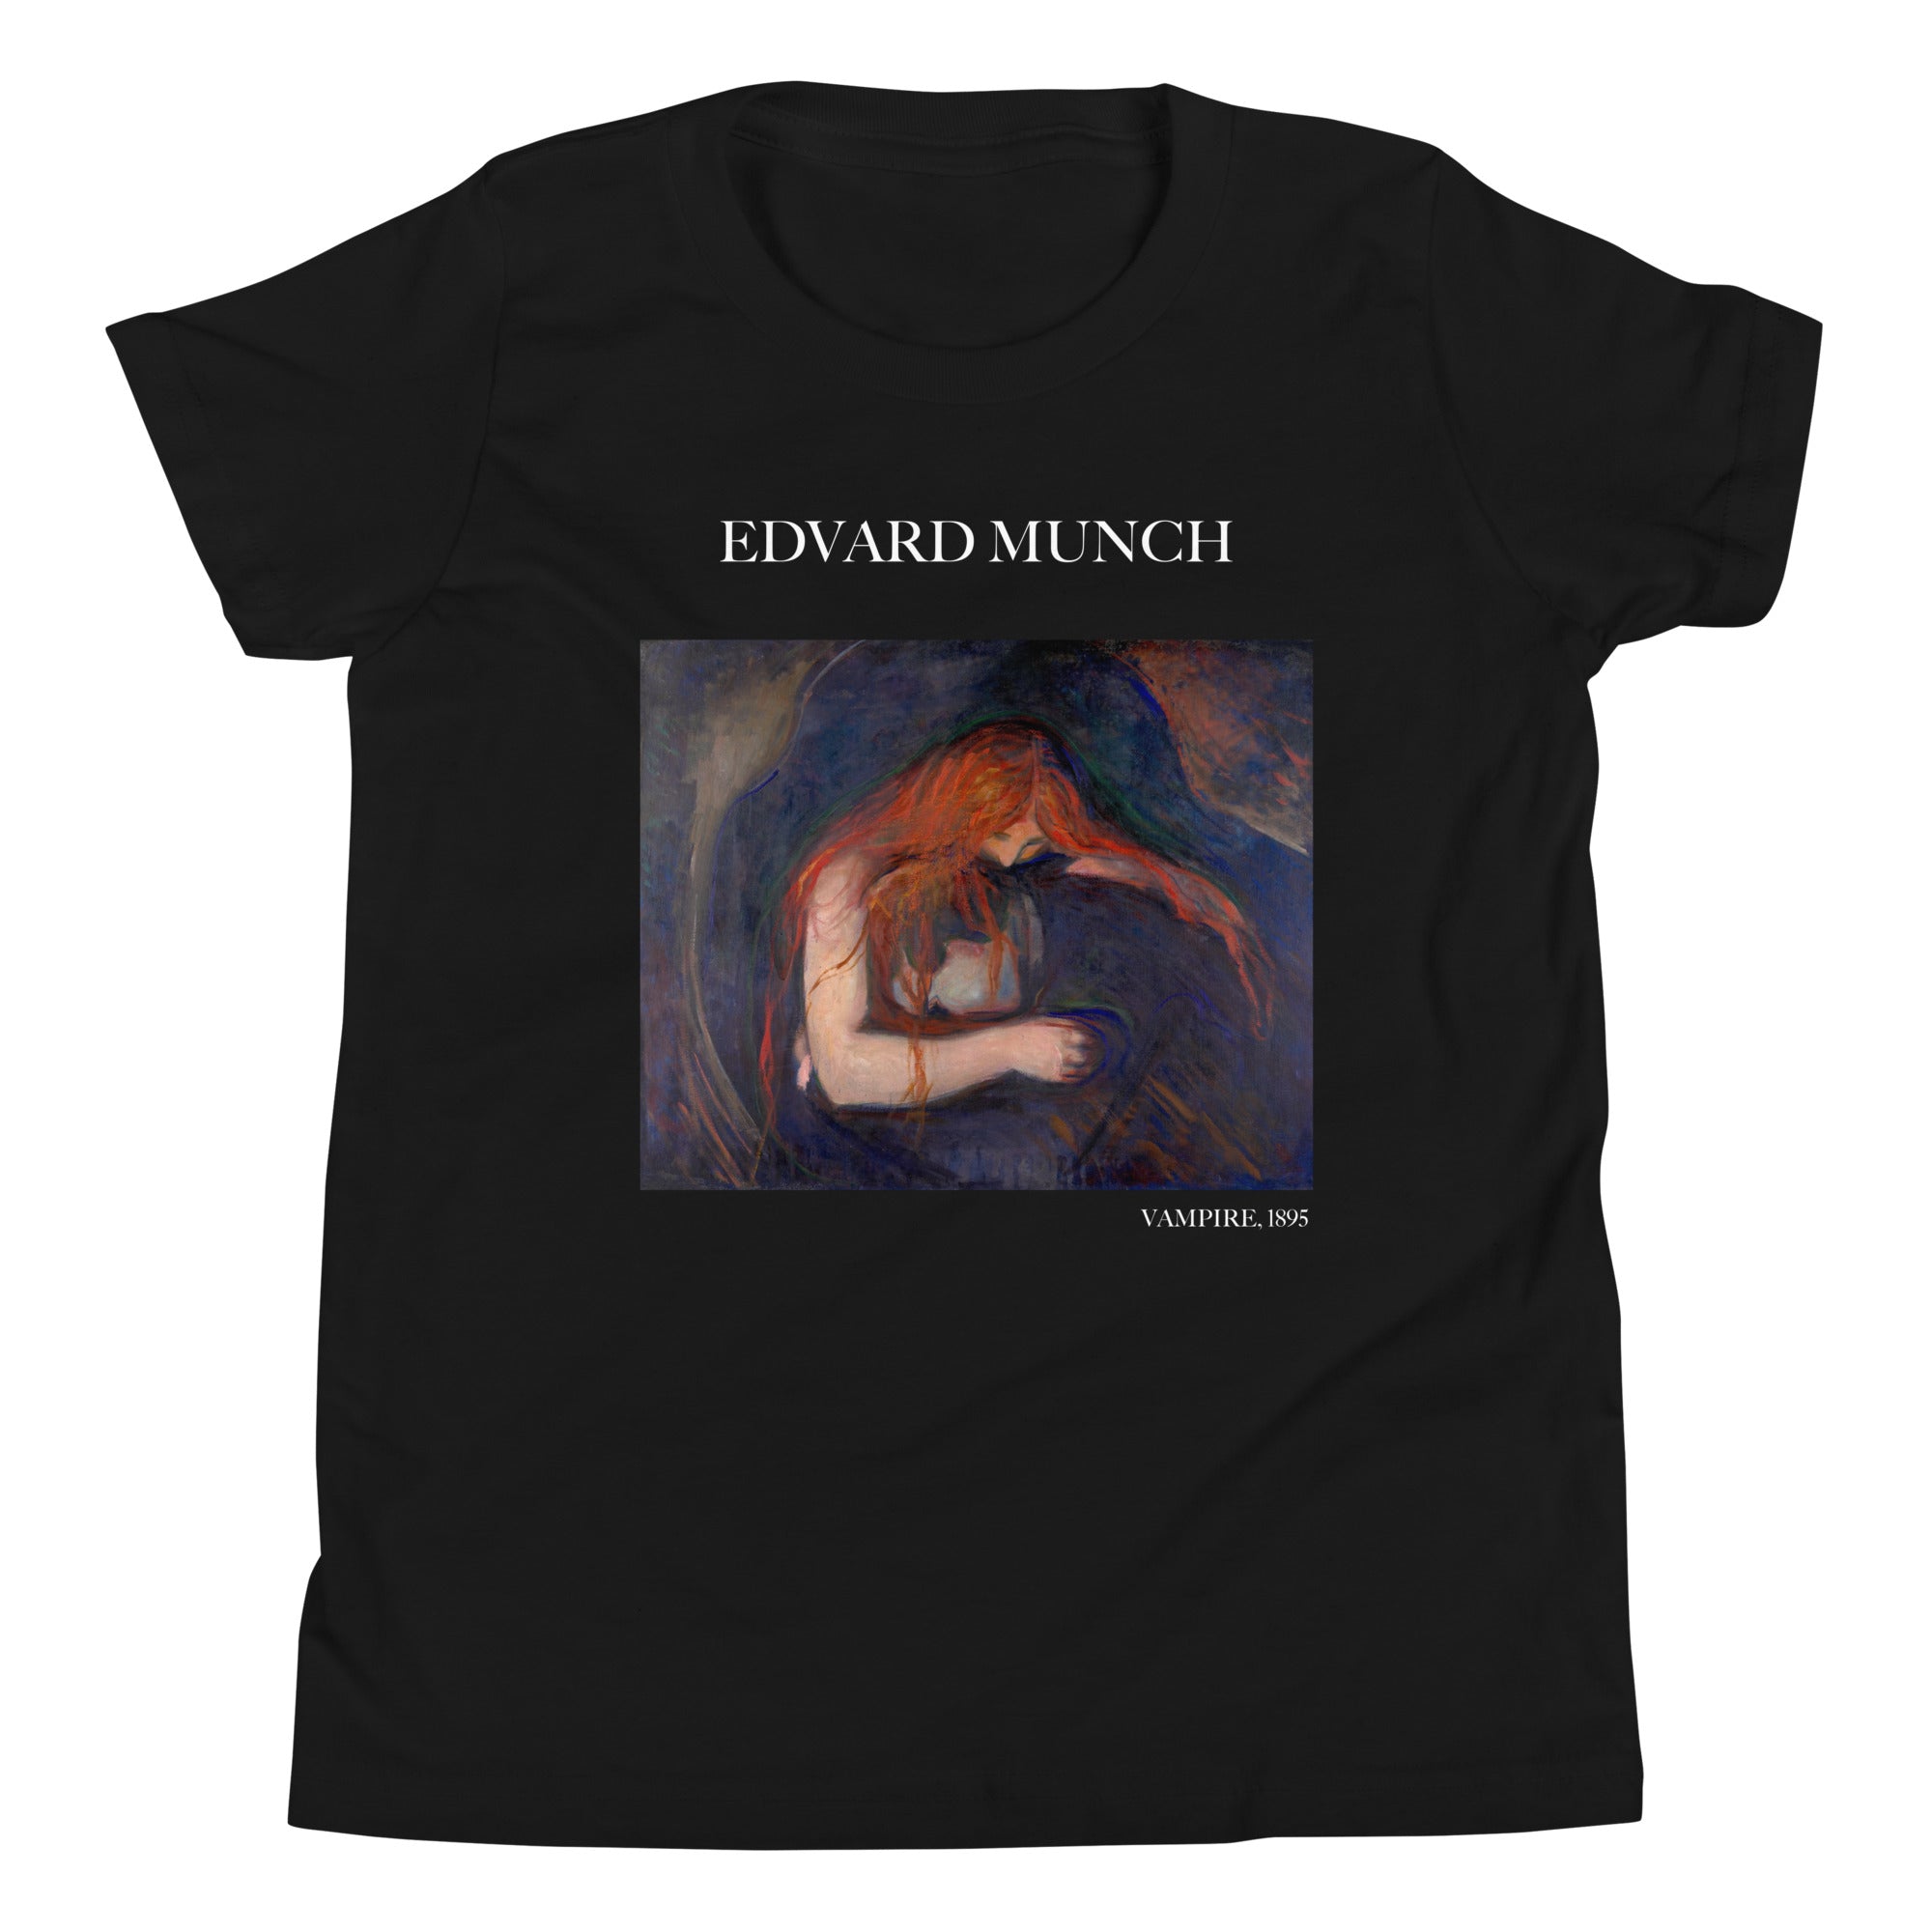 Edvard Munch 'Vampire' Famous Painting Short Sleeve T-Shirt | Premium Youth Art Tee